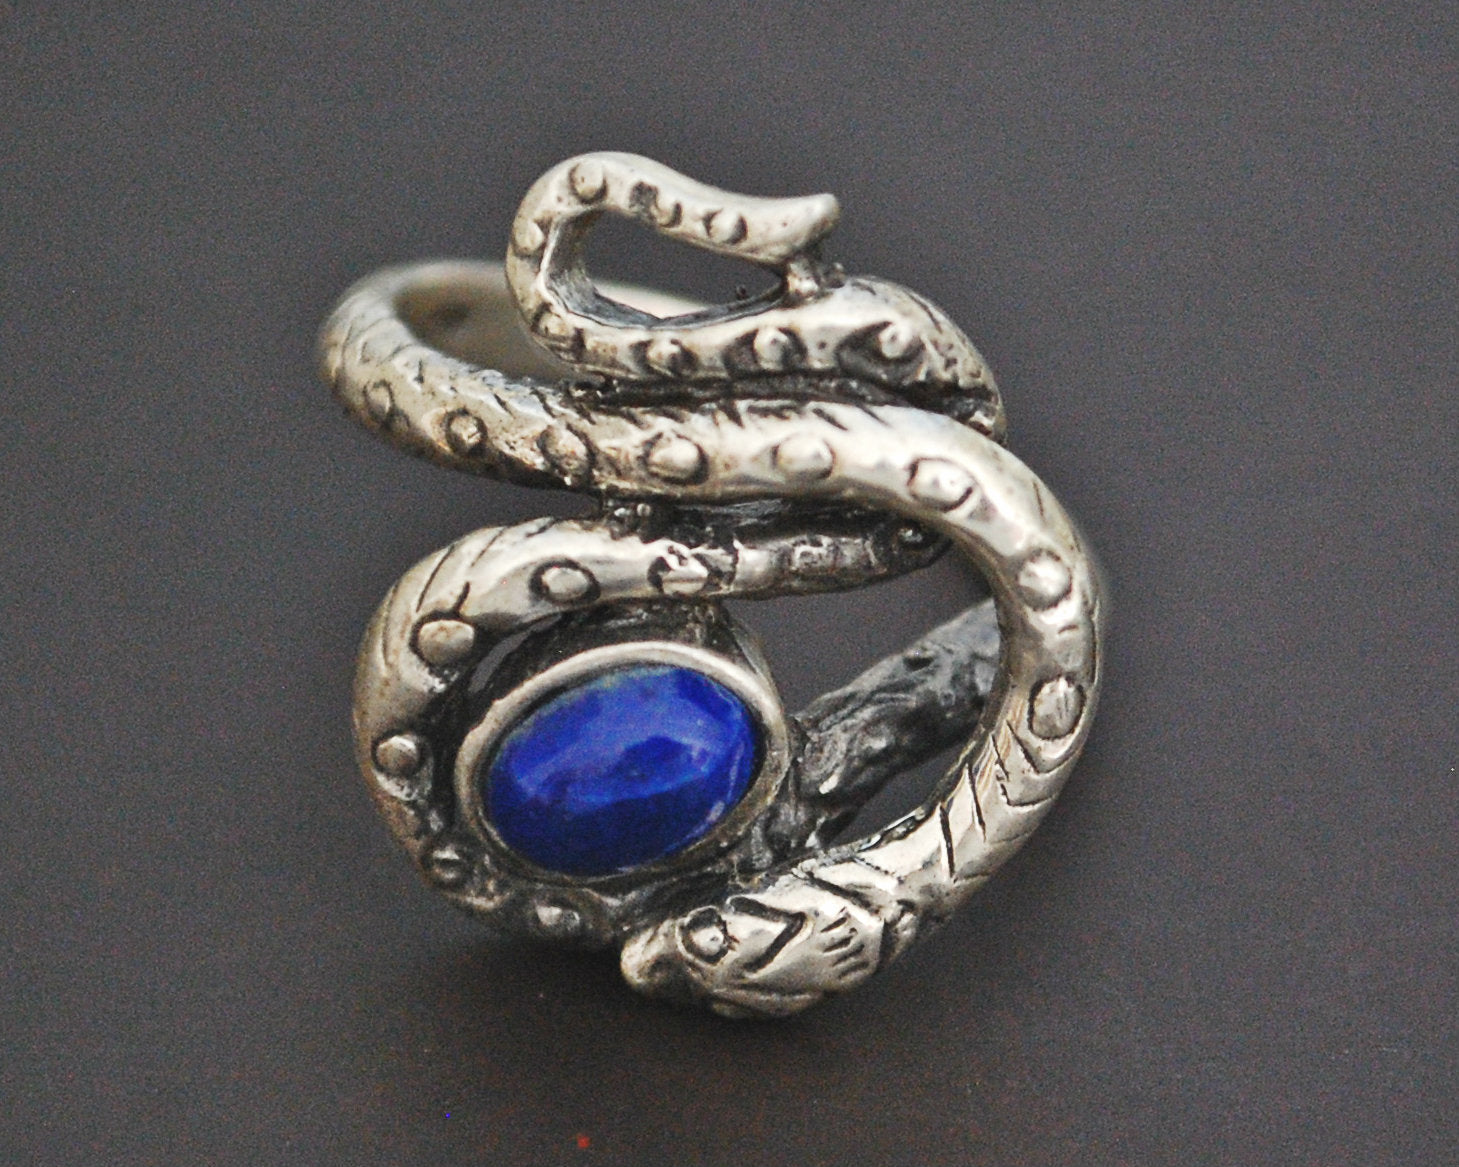 Snake Ring with Lapis Lazuli - Size 8